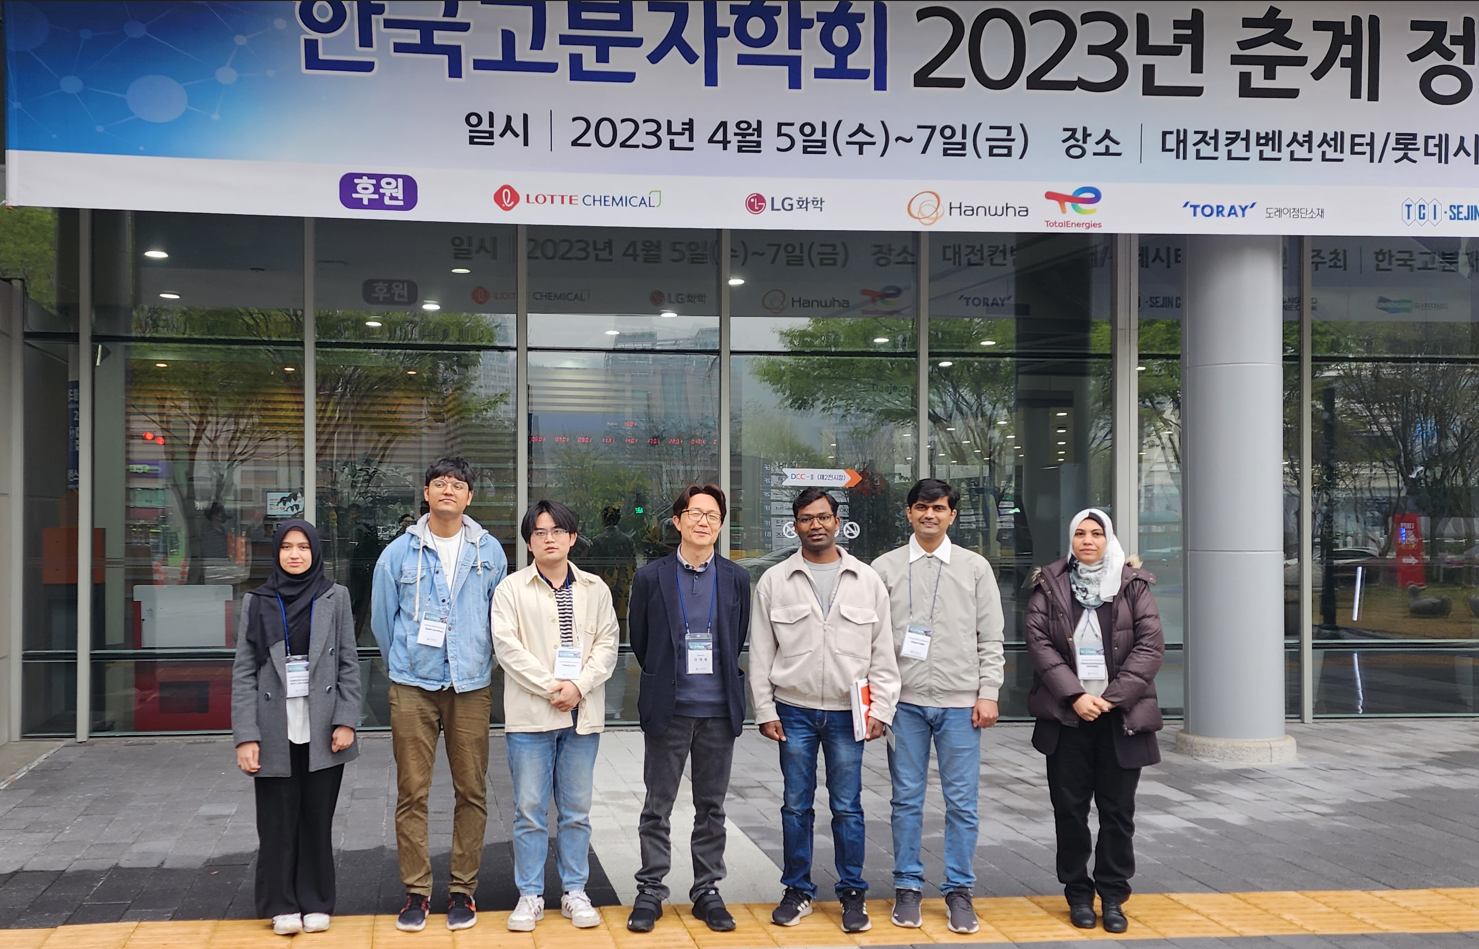 PSK 2023 Spring Meeting, Daejeon 첨부 이미지